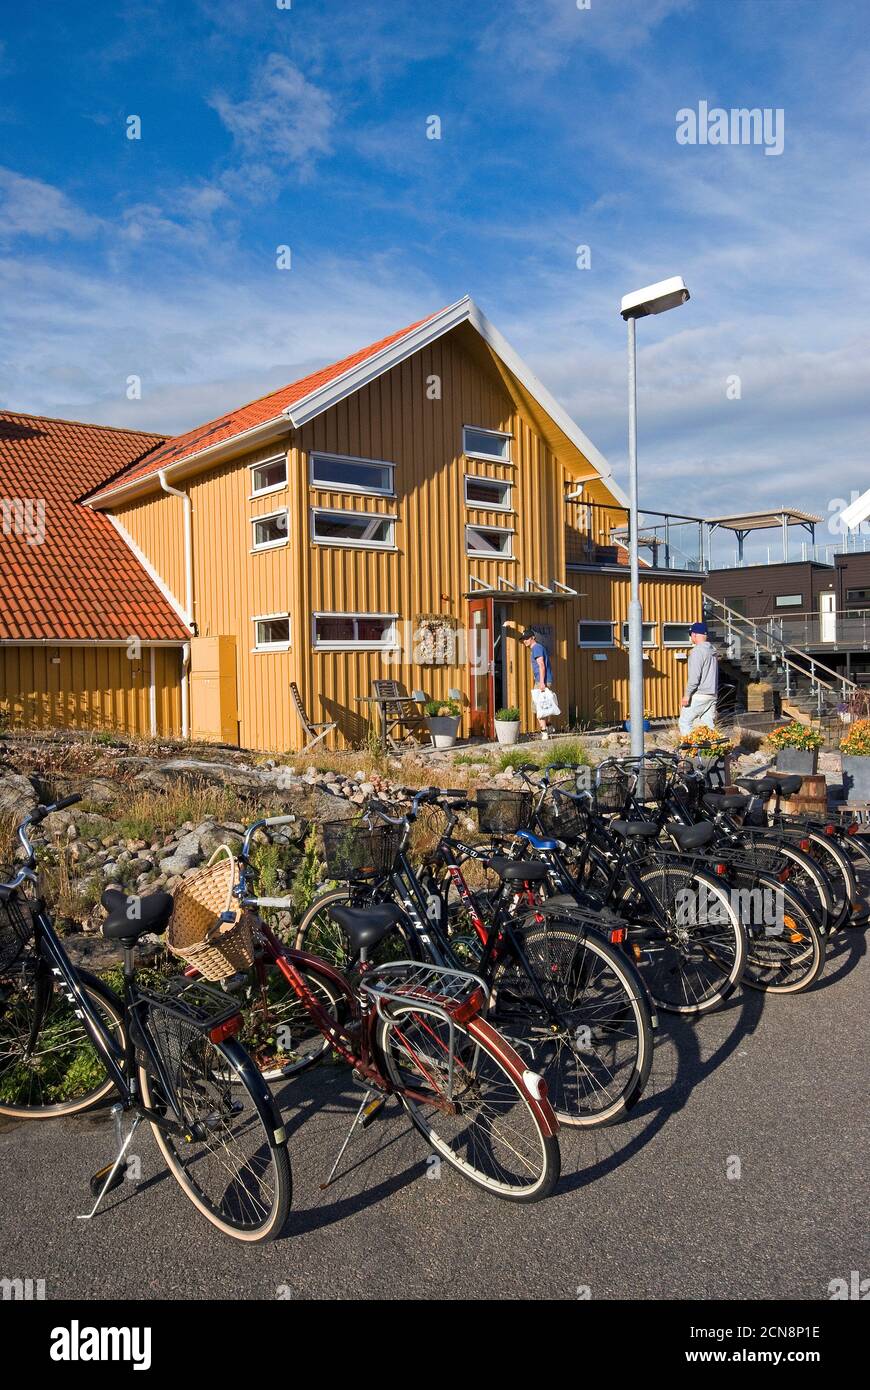 Vélos garés à Kladesholmen, comté de Västra Götaland, Suède Banque D'Images